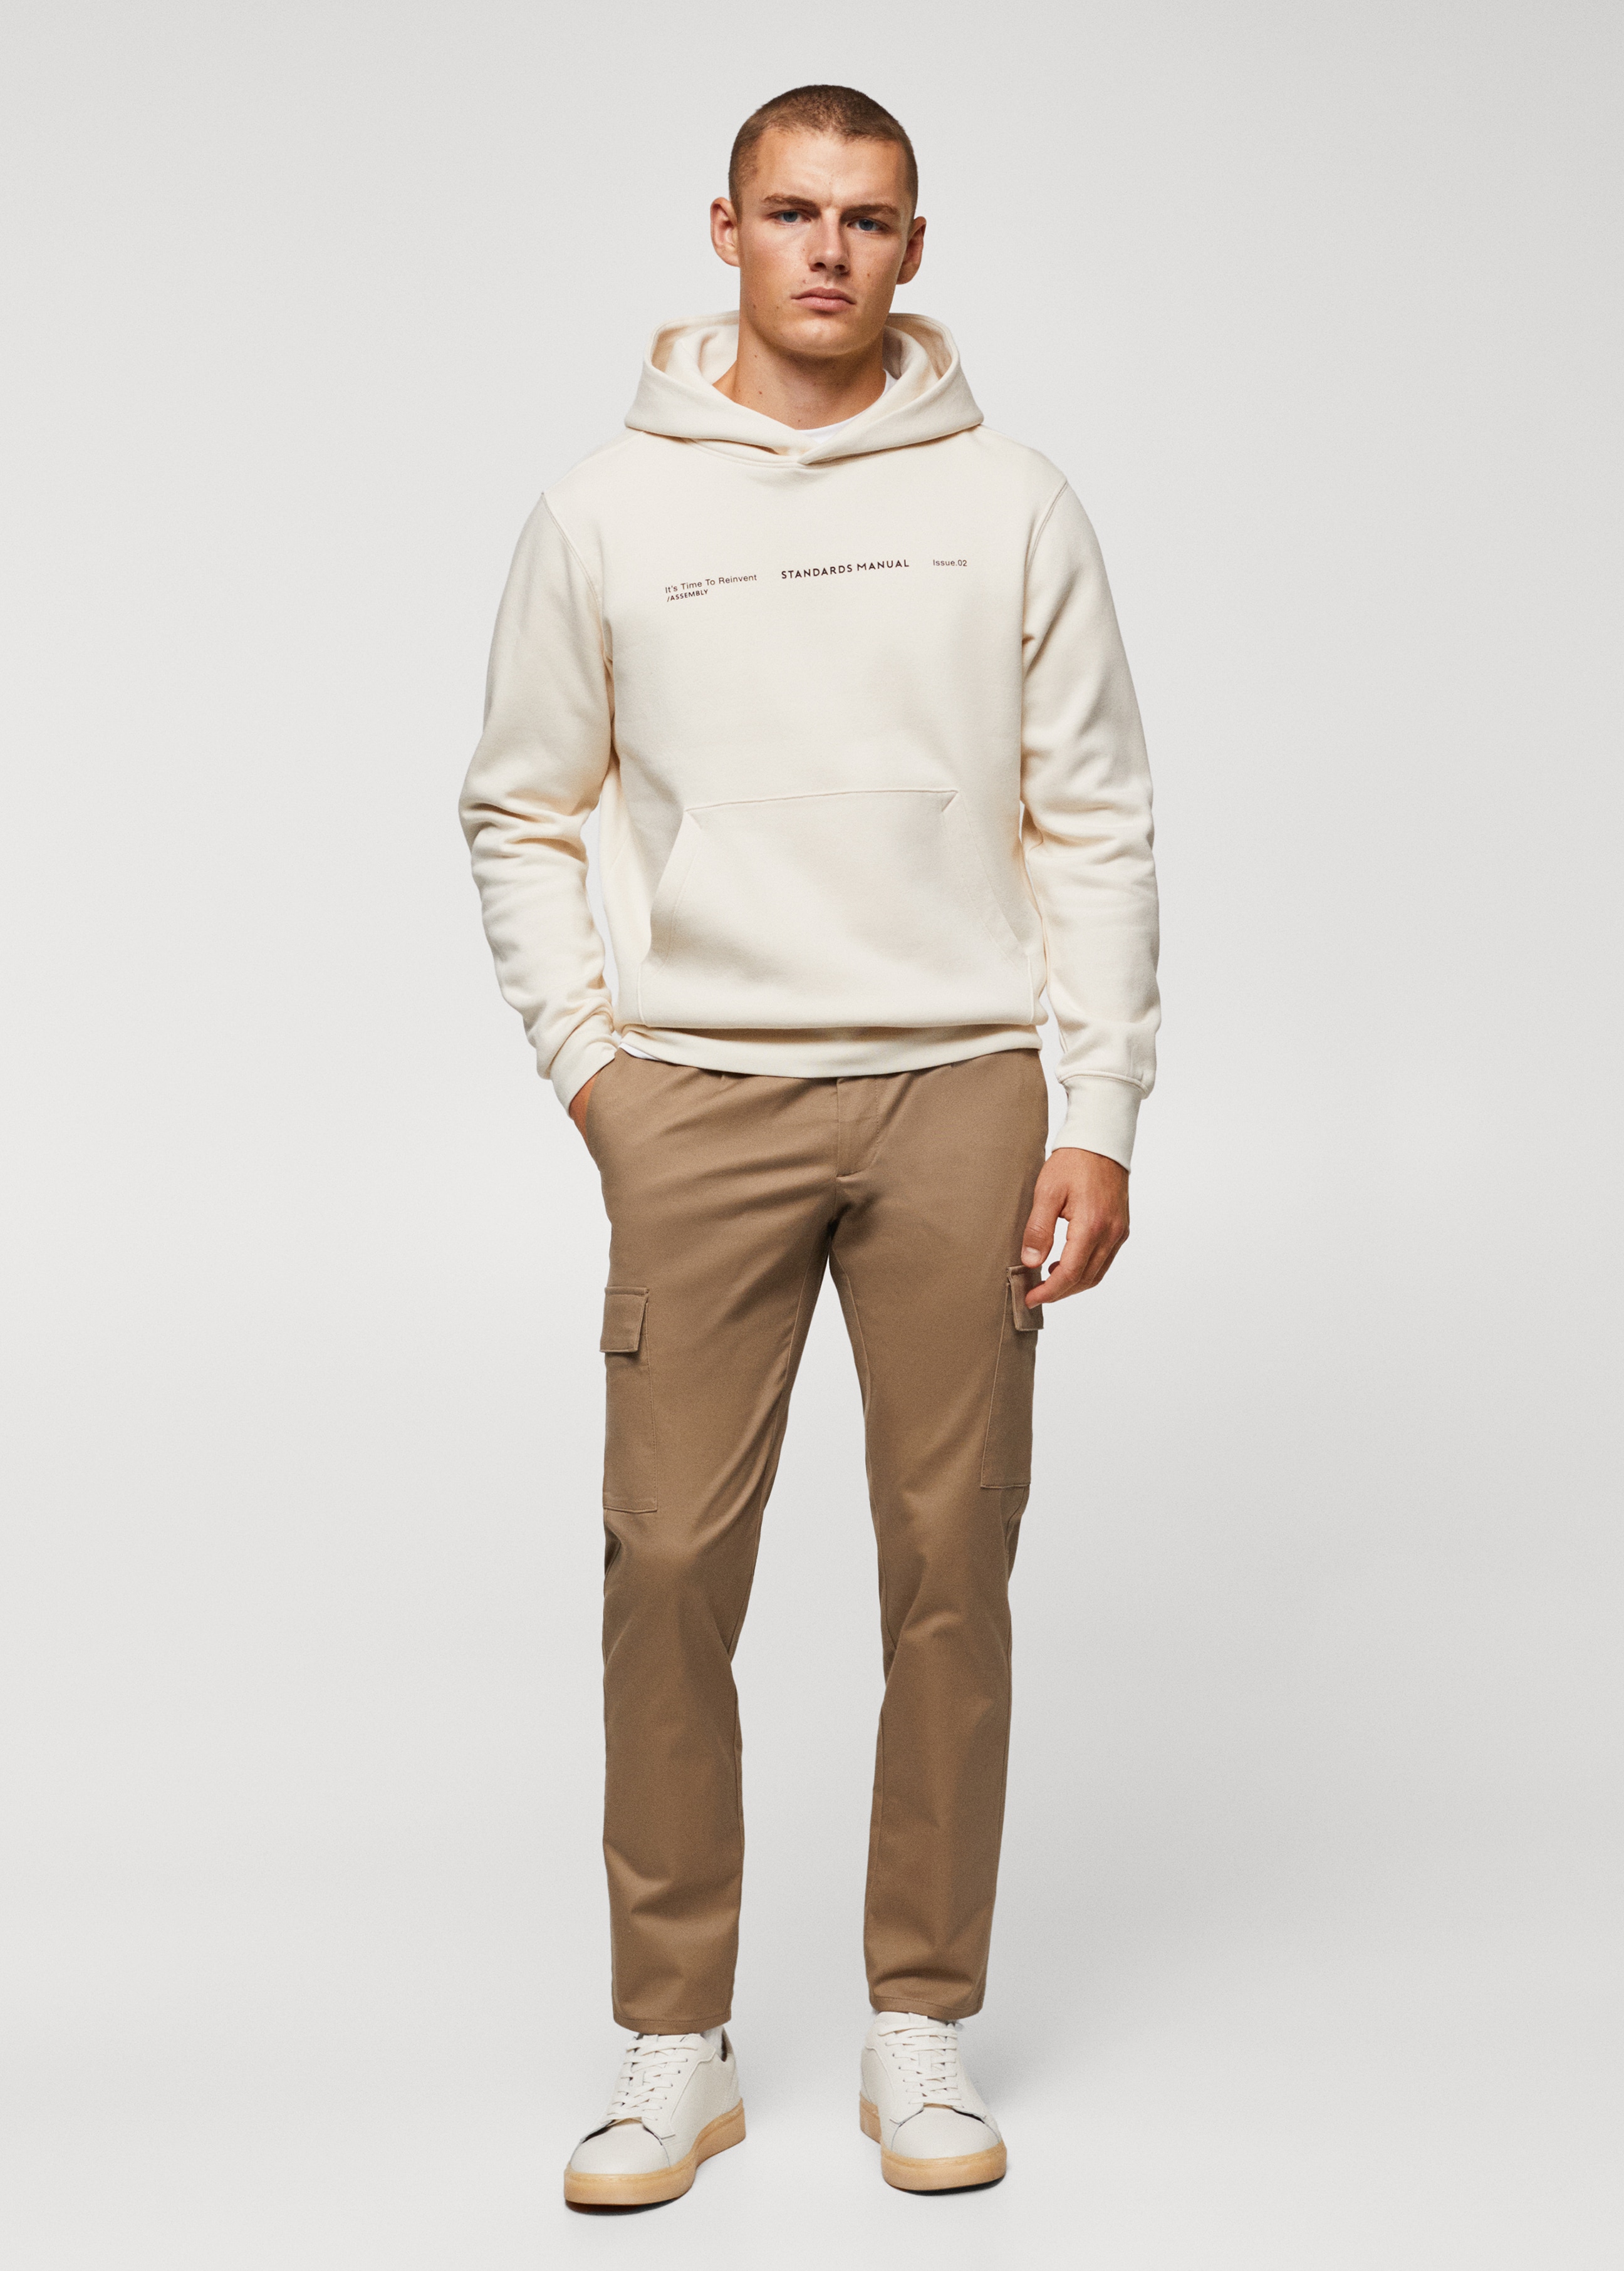 Cotton hooded sweatshirt text - General plane